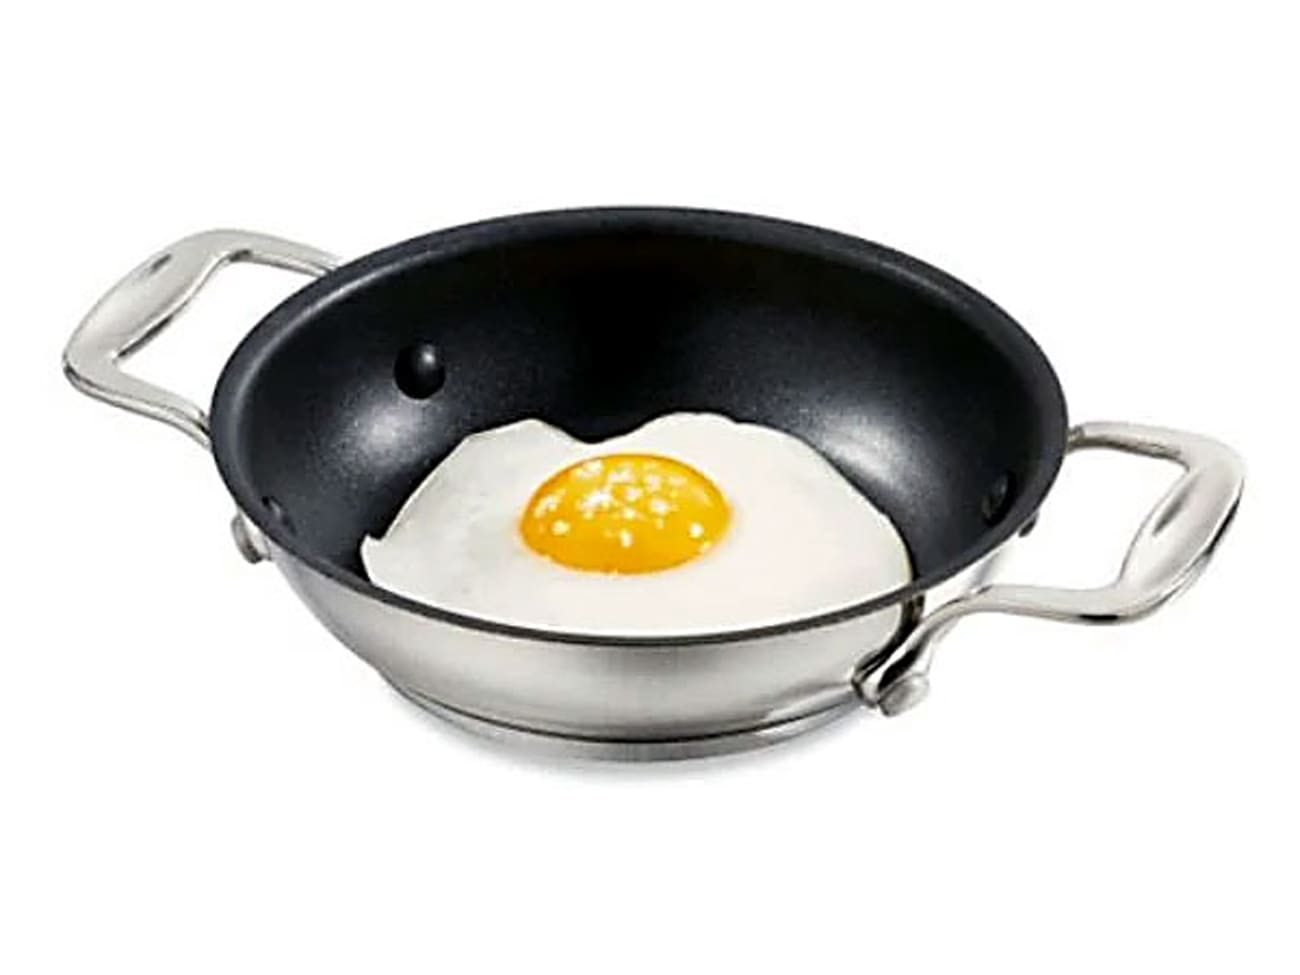 Tegamino per uova Beka Chef - rivestimento antiaderente - Ø 16 cm - Beka